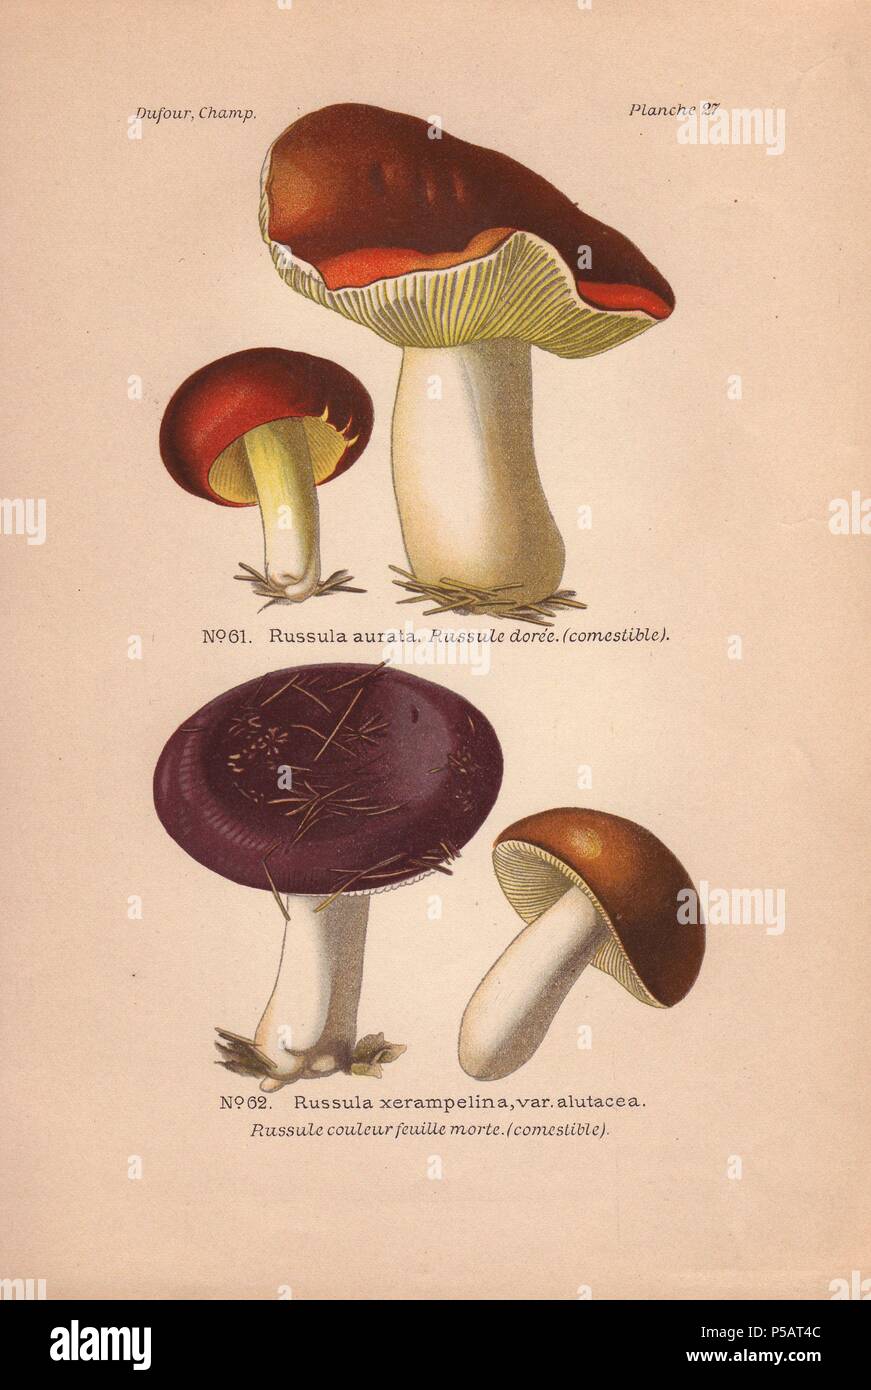 Edible mushrooms: gilded brittlegill mushoom (Russula aurata) and purple-colored shrimp mushroom (Russula xerampelina).. . Chromolithograph from Leon Dufour's 'Atlas des Champignons Comestibles et Veneneux' (1891). Stock Photo